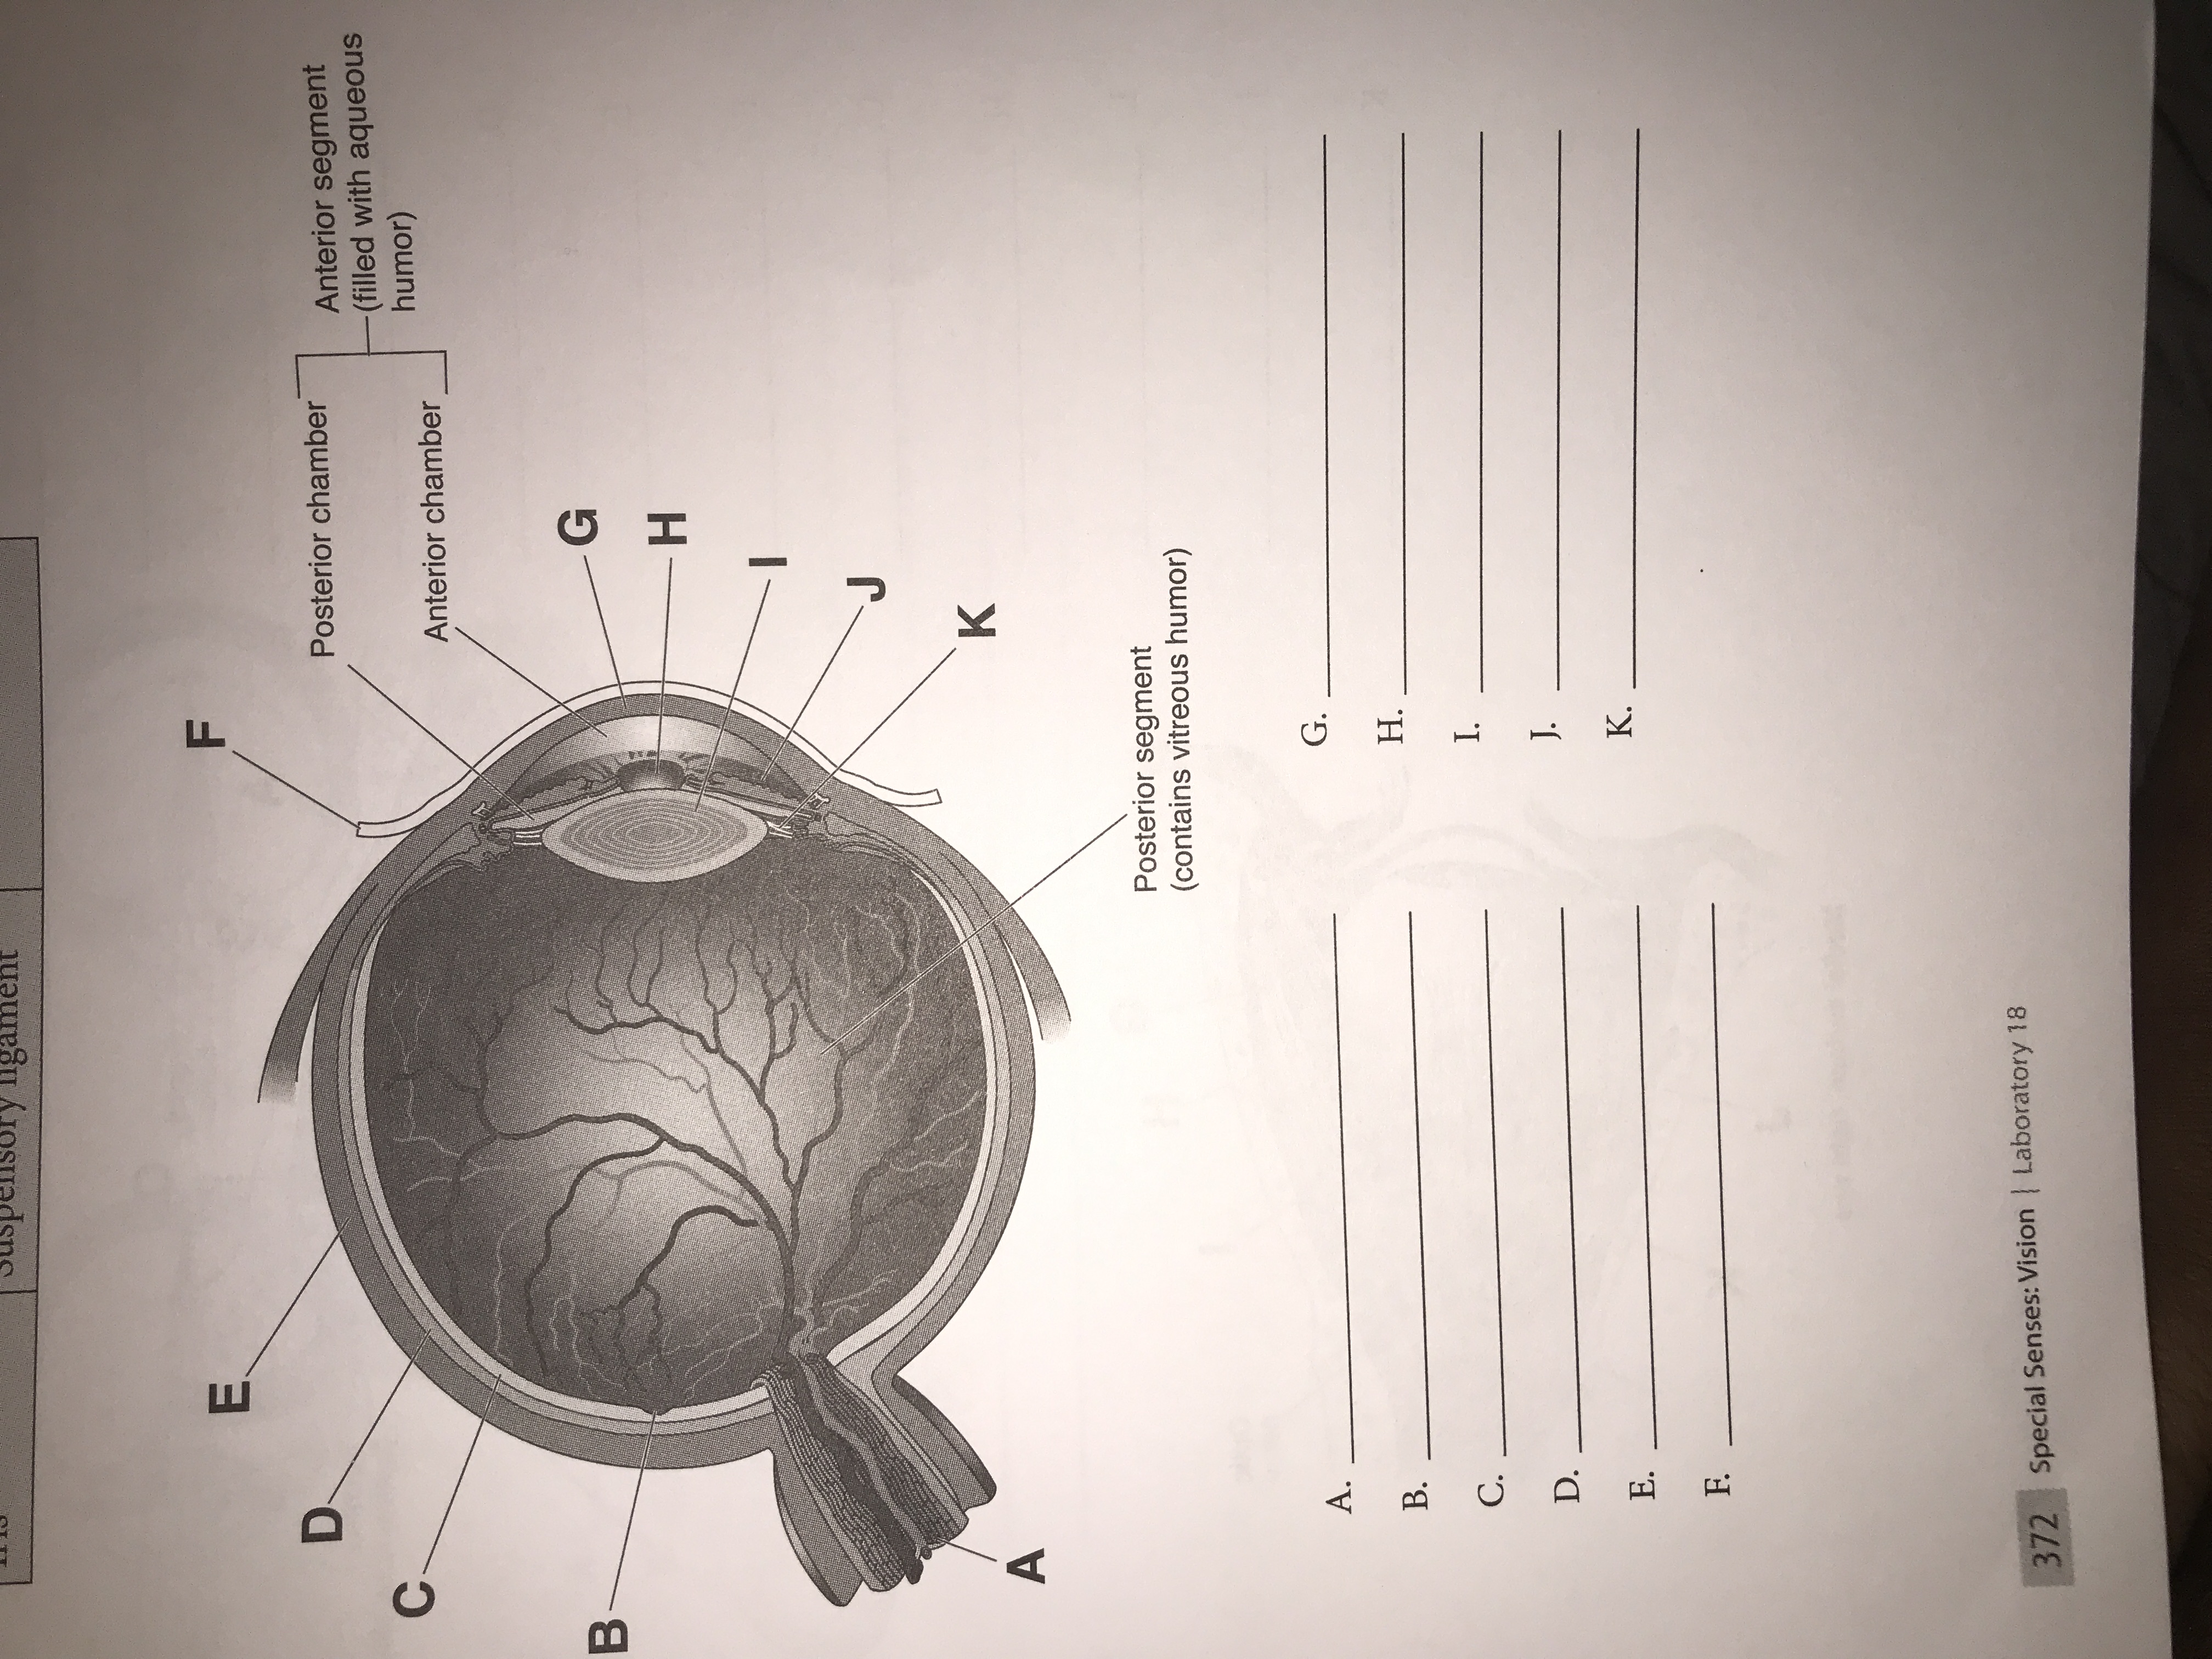 suspensory ligament sheep eye